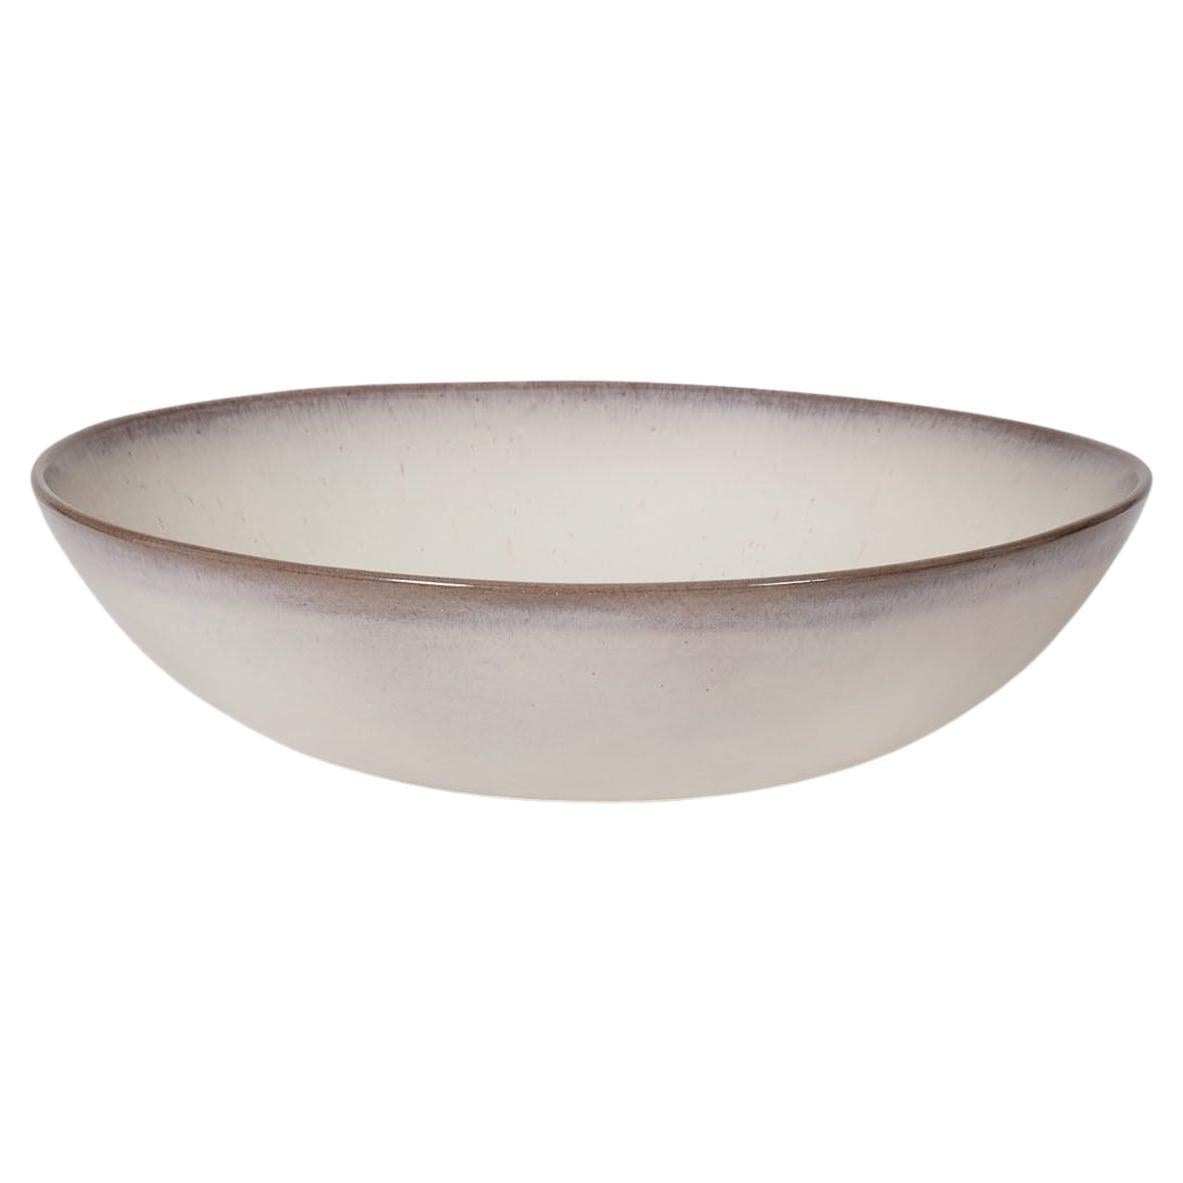 Ceramic bowl by Ruelland